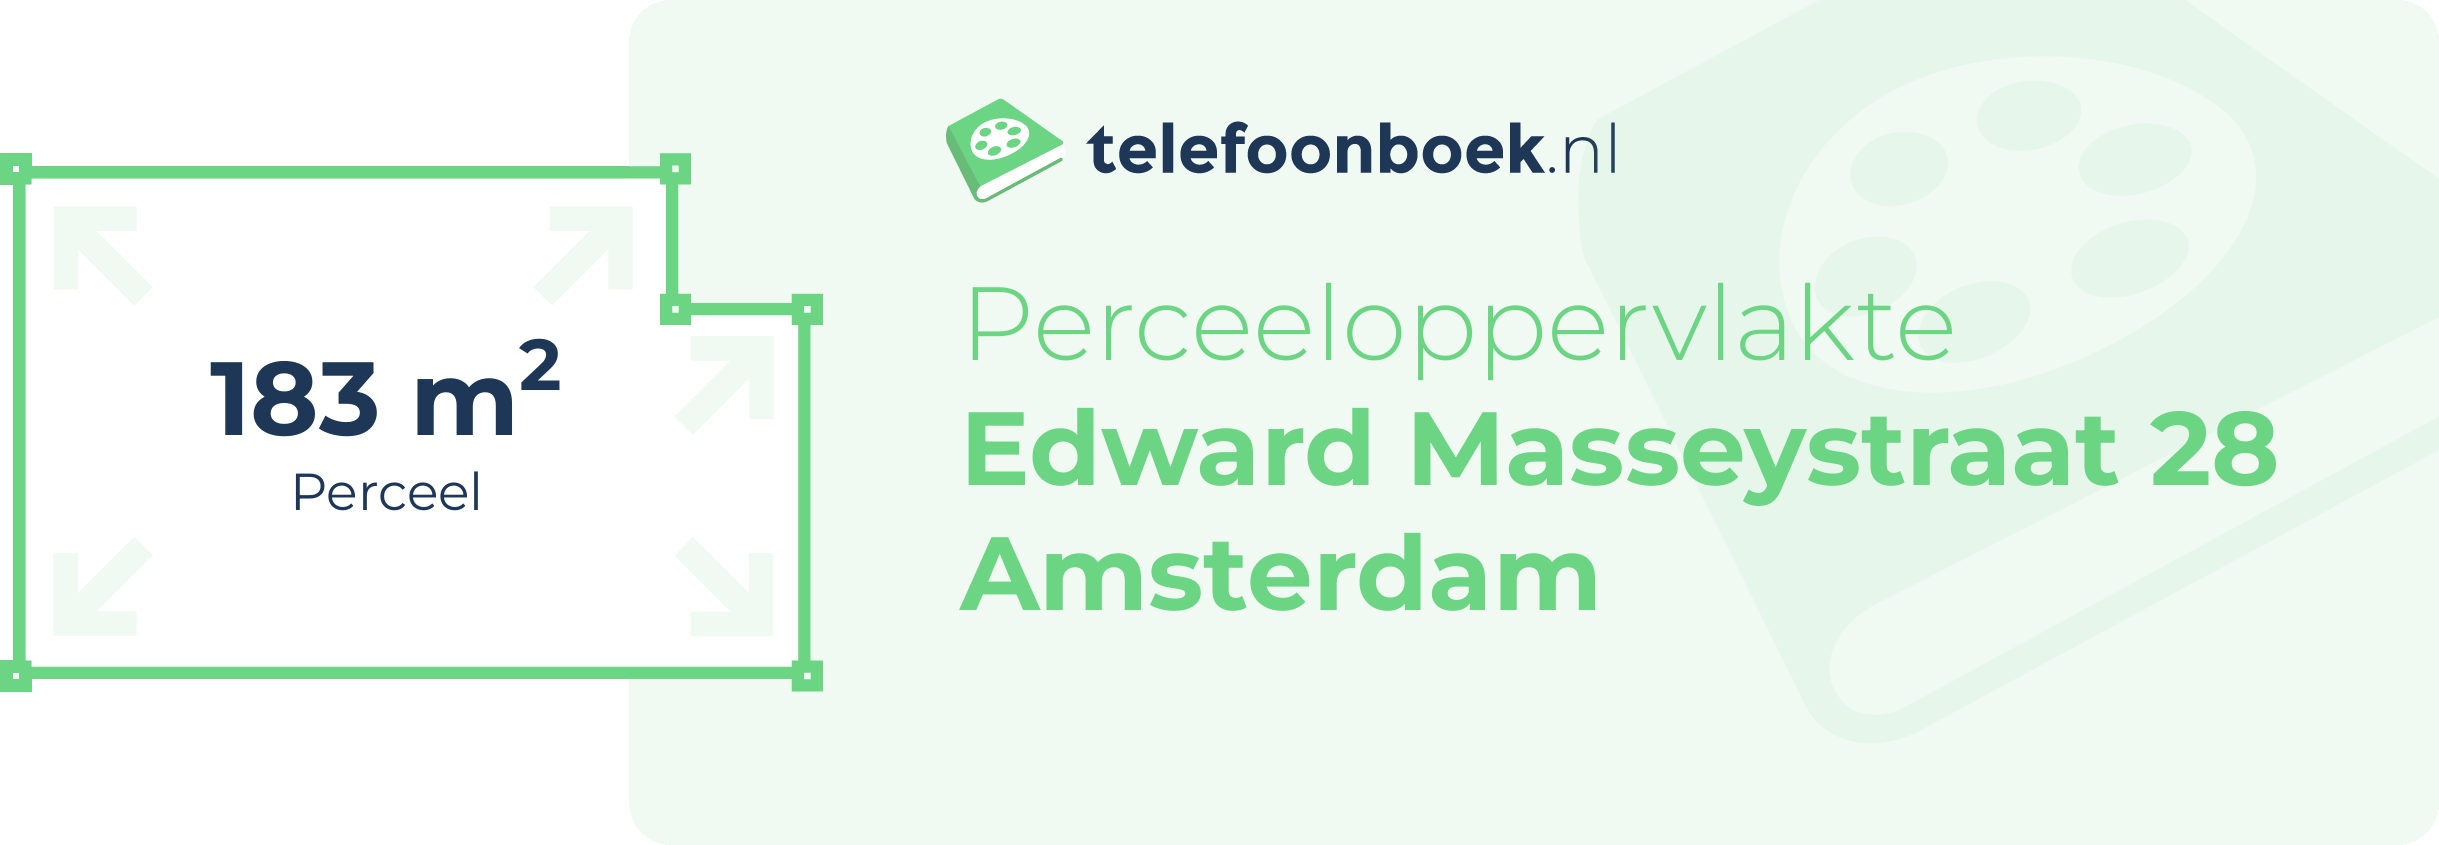 Perceeloppervlakte Edward Masseystraat 28 Amsterdam